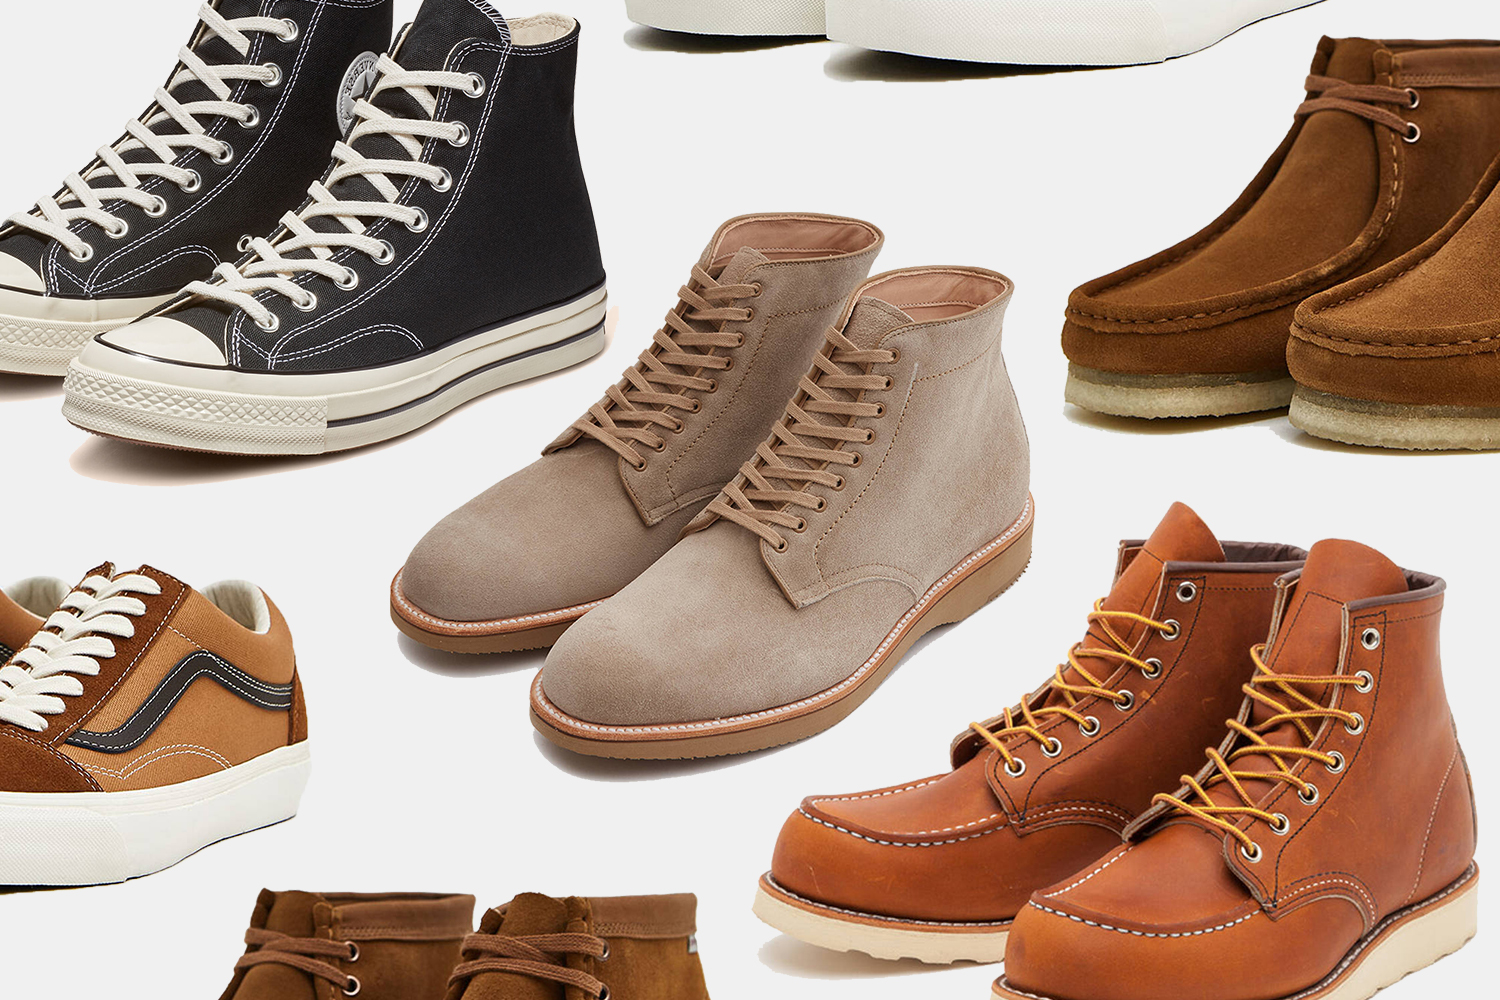 converse leather shoes sale